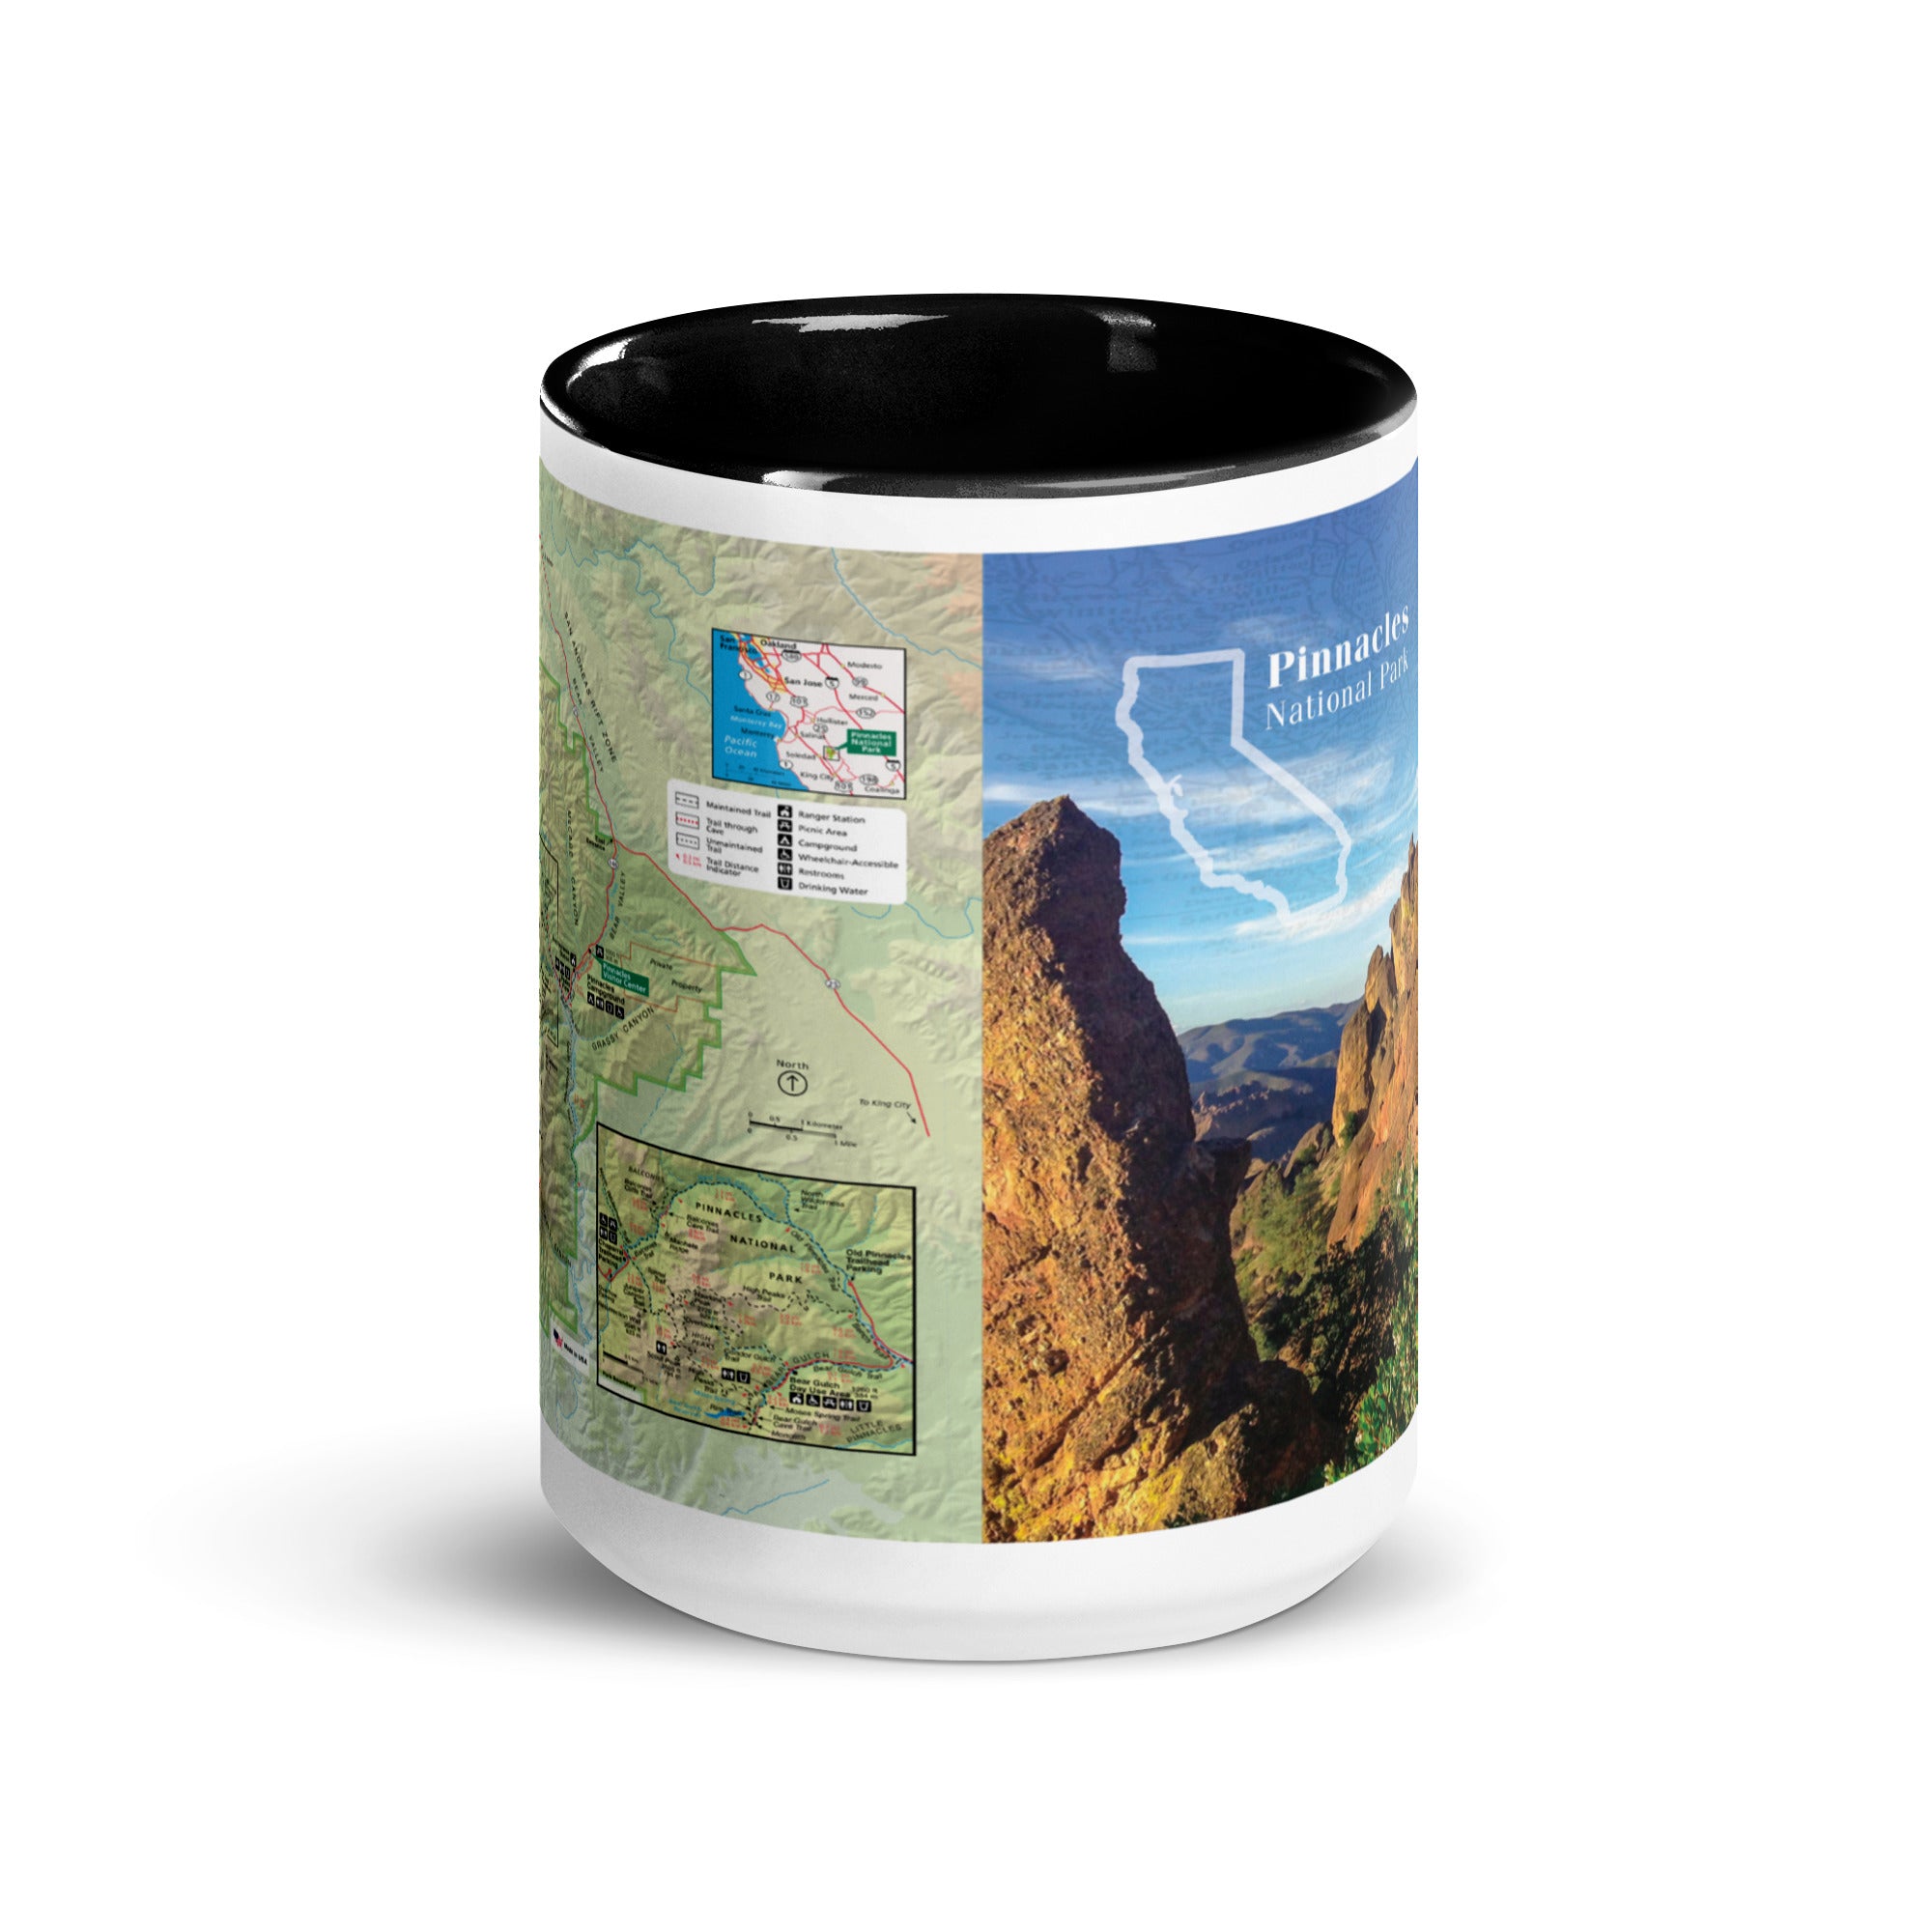 Pinnacles National Park Mug with Black Inside